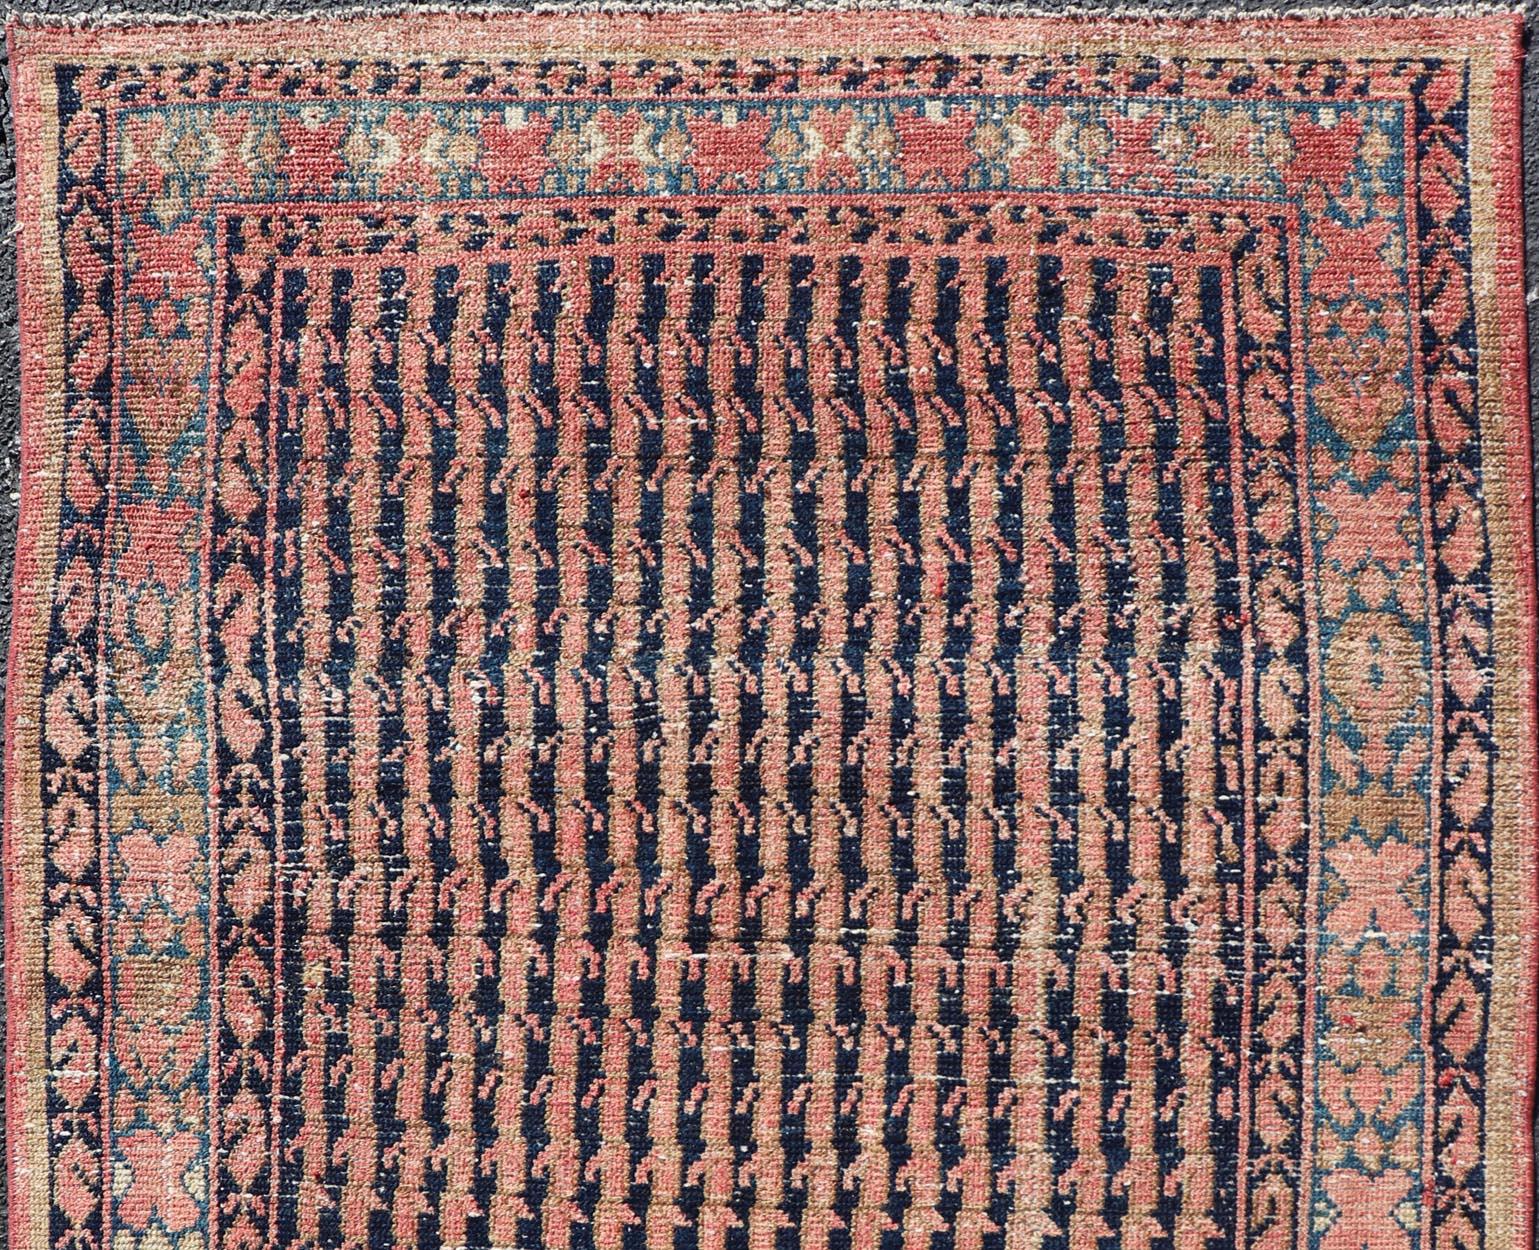 Antique Persian Hamadan rug with gorgeous all-over design in tribal motifs.
Keivan Woven Arts / rug EMB-9514-P13087, country of origin / type: Iran / Hamadan, circa 1930.

Measures: 3'6 x 5'0.